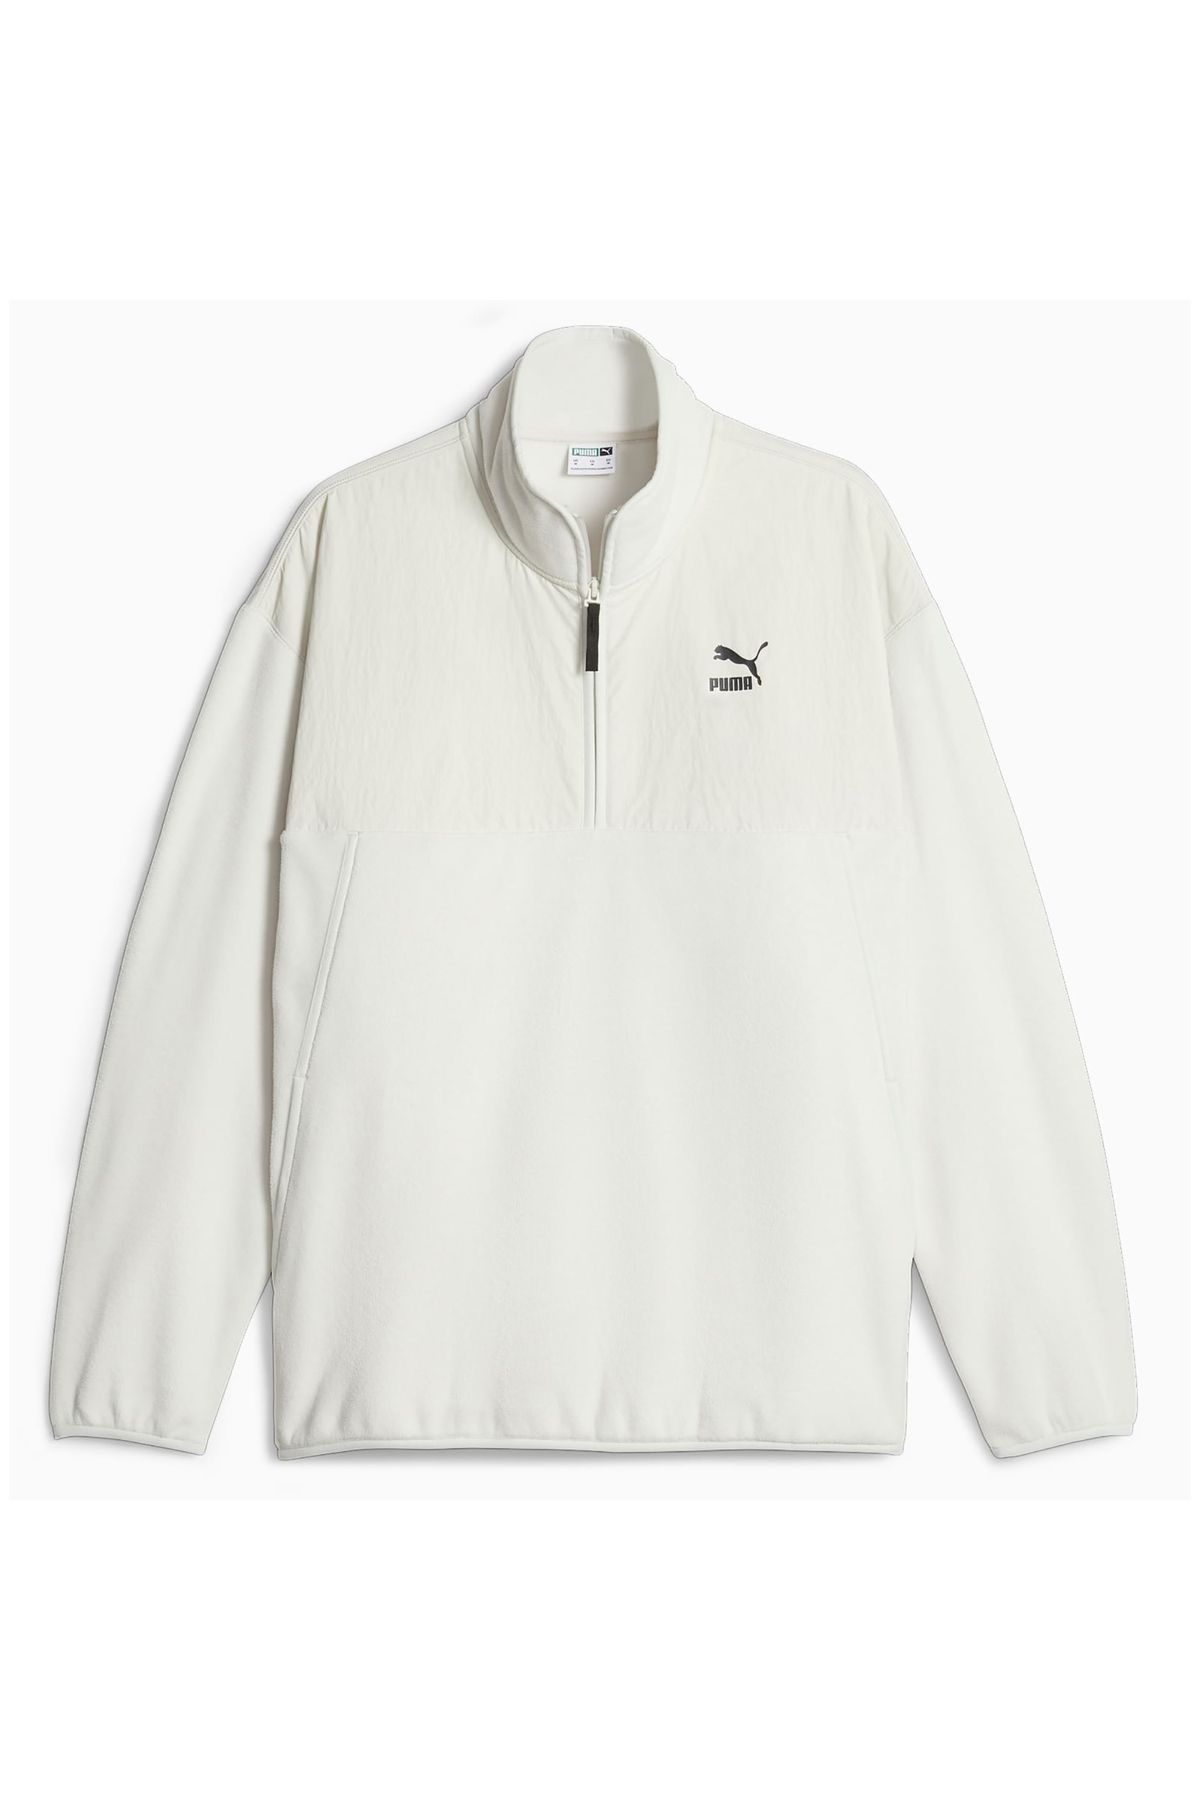 Puma Classics Utility Erkek Beyaz Polar Sweatshirt (621349-17)